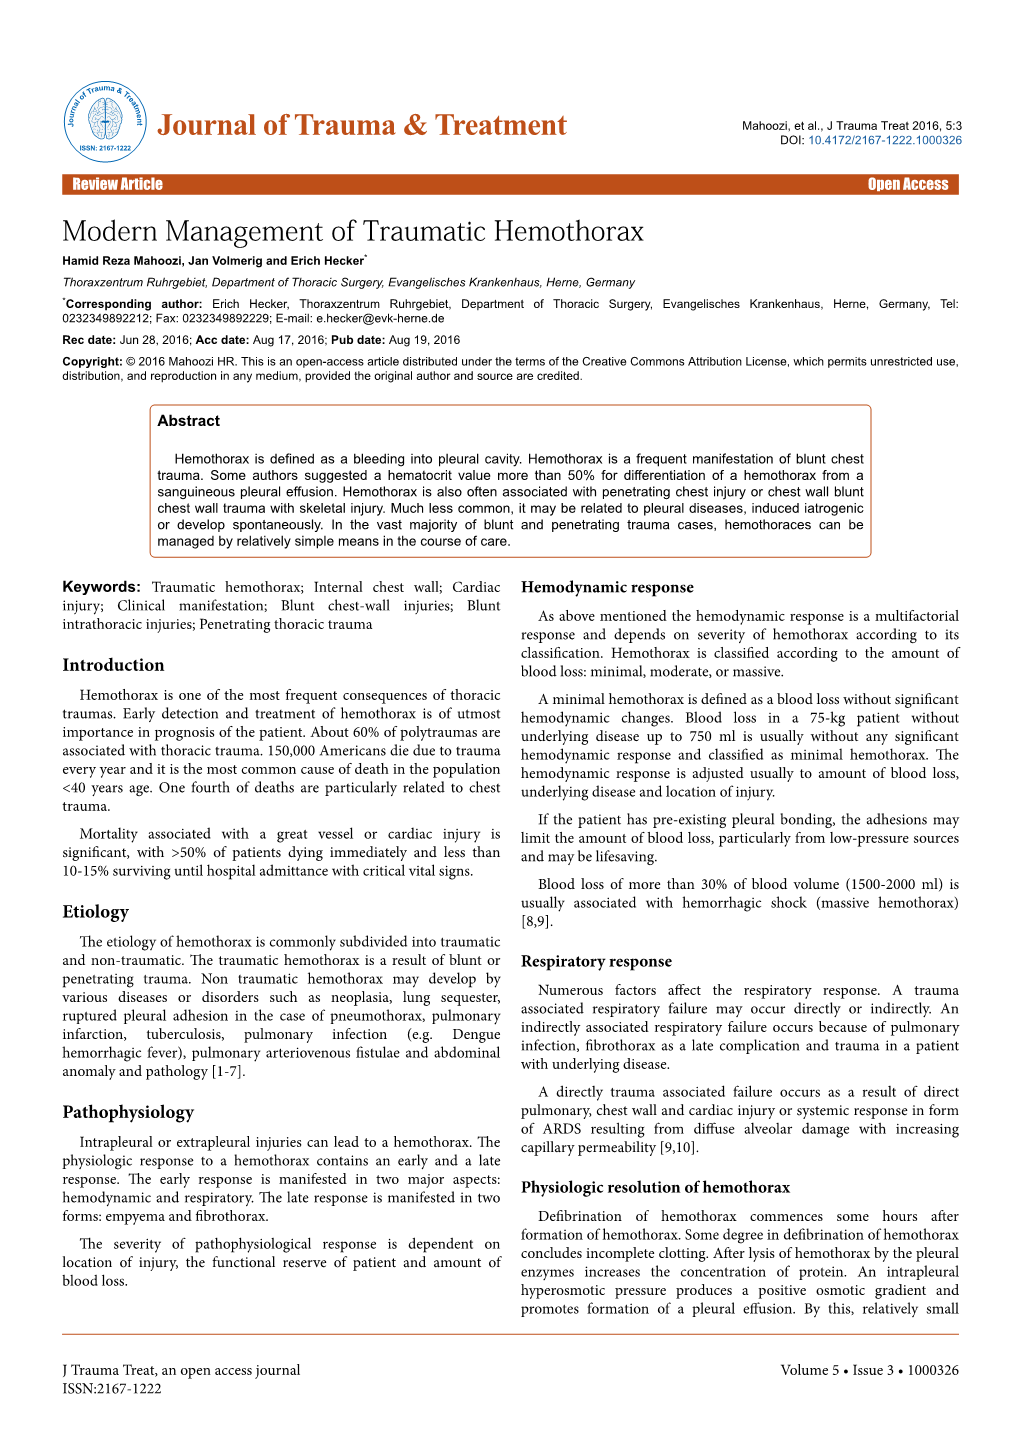 Modern Management of Traumatic Hemothorax